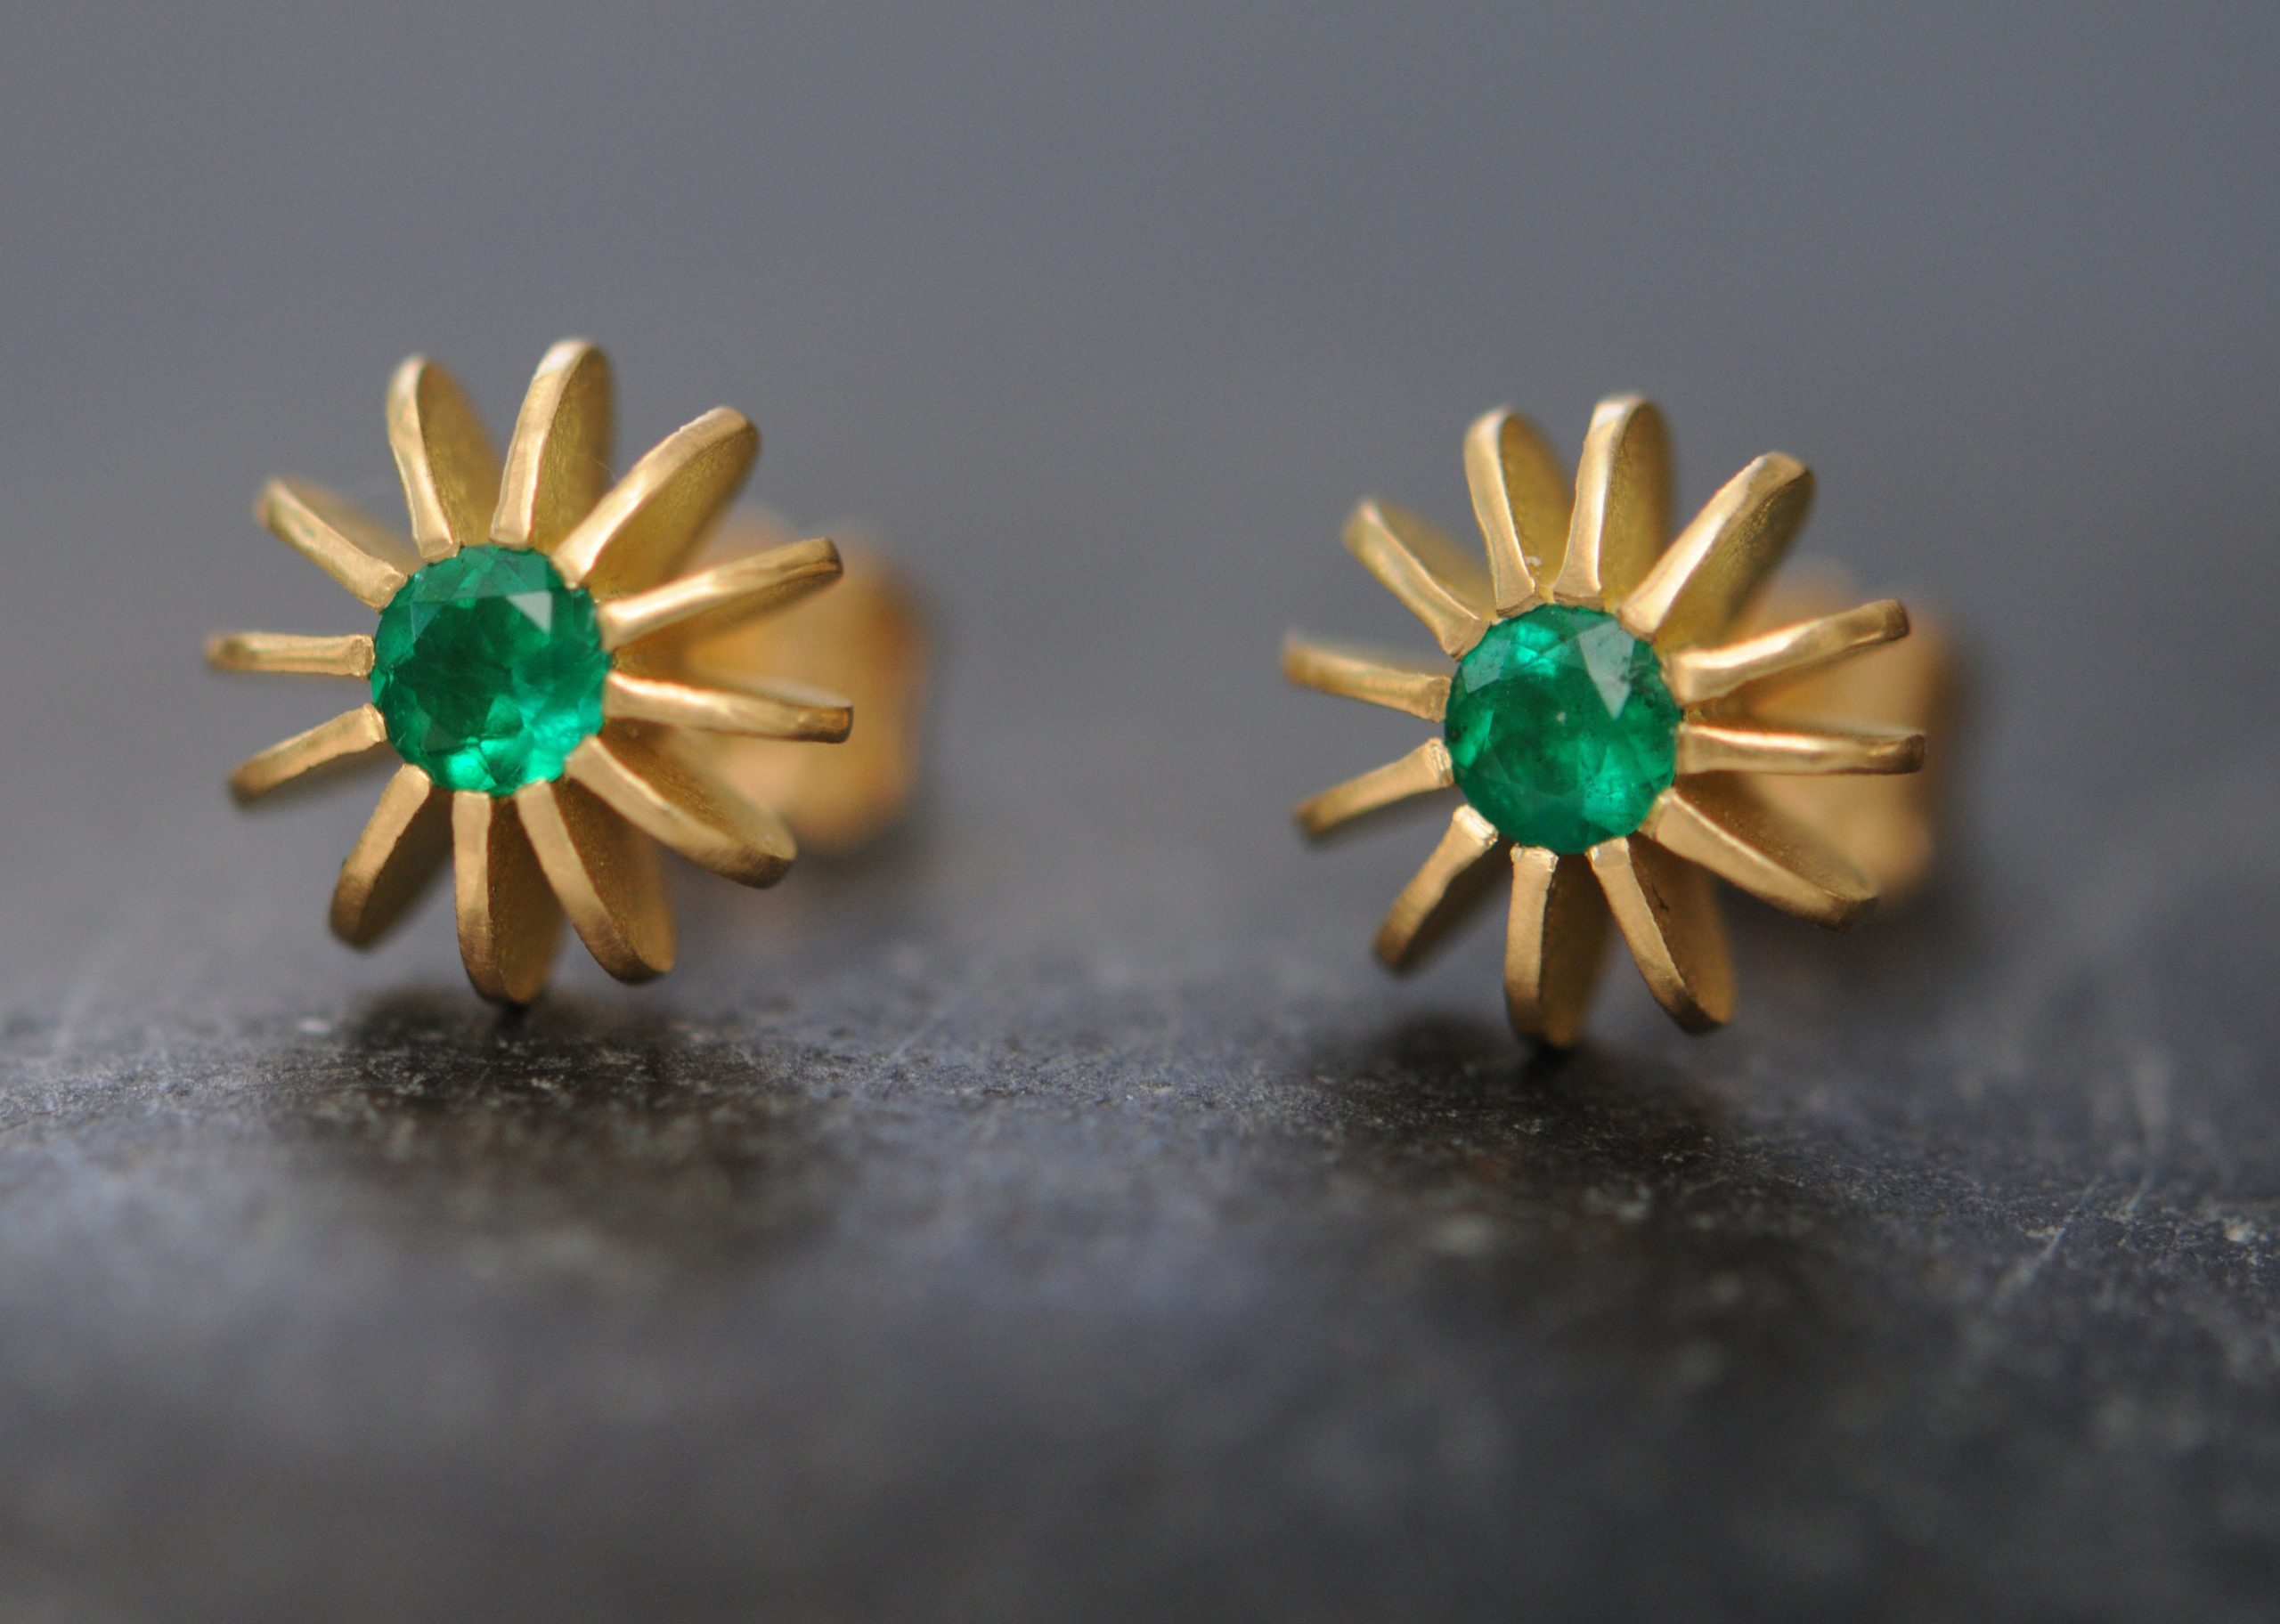 Emerald Stud Earrings In 18k Gold, Christmas Gift For Her, Sea Urchin Stud Earrings